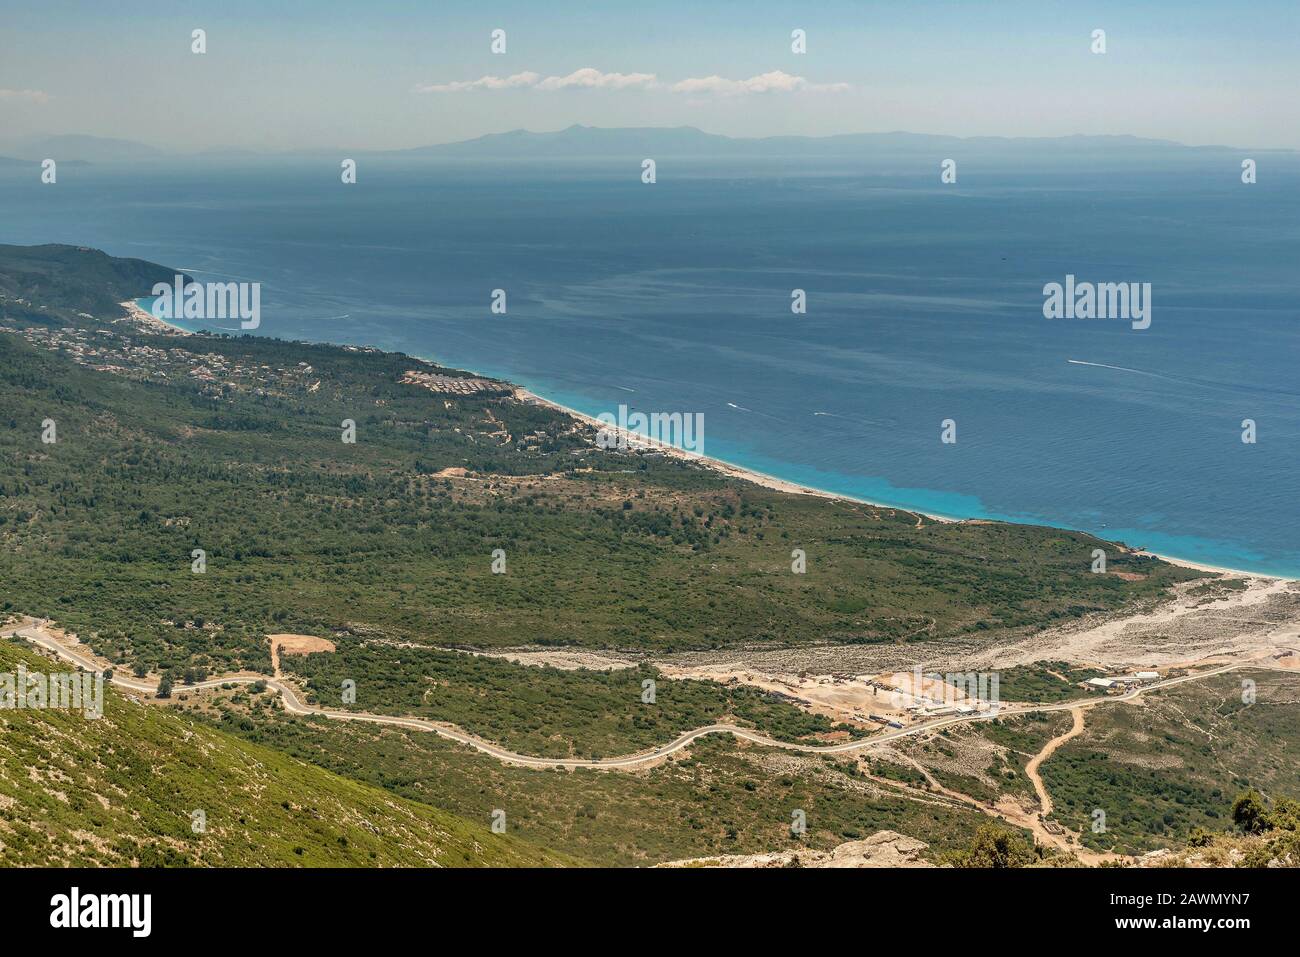 View of Adriatic coast near Llogara pass, Albania Stock Photo